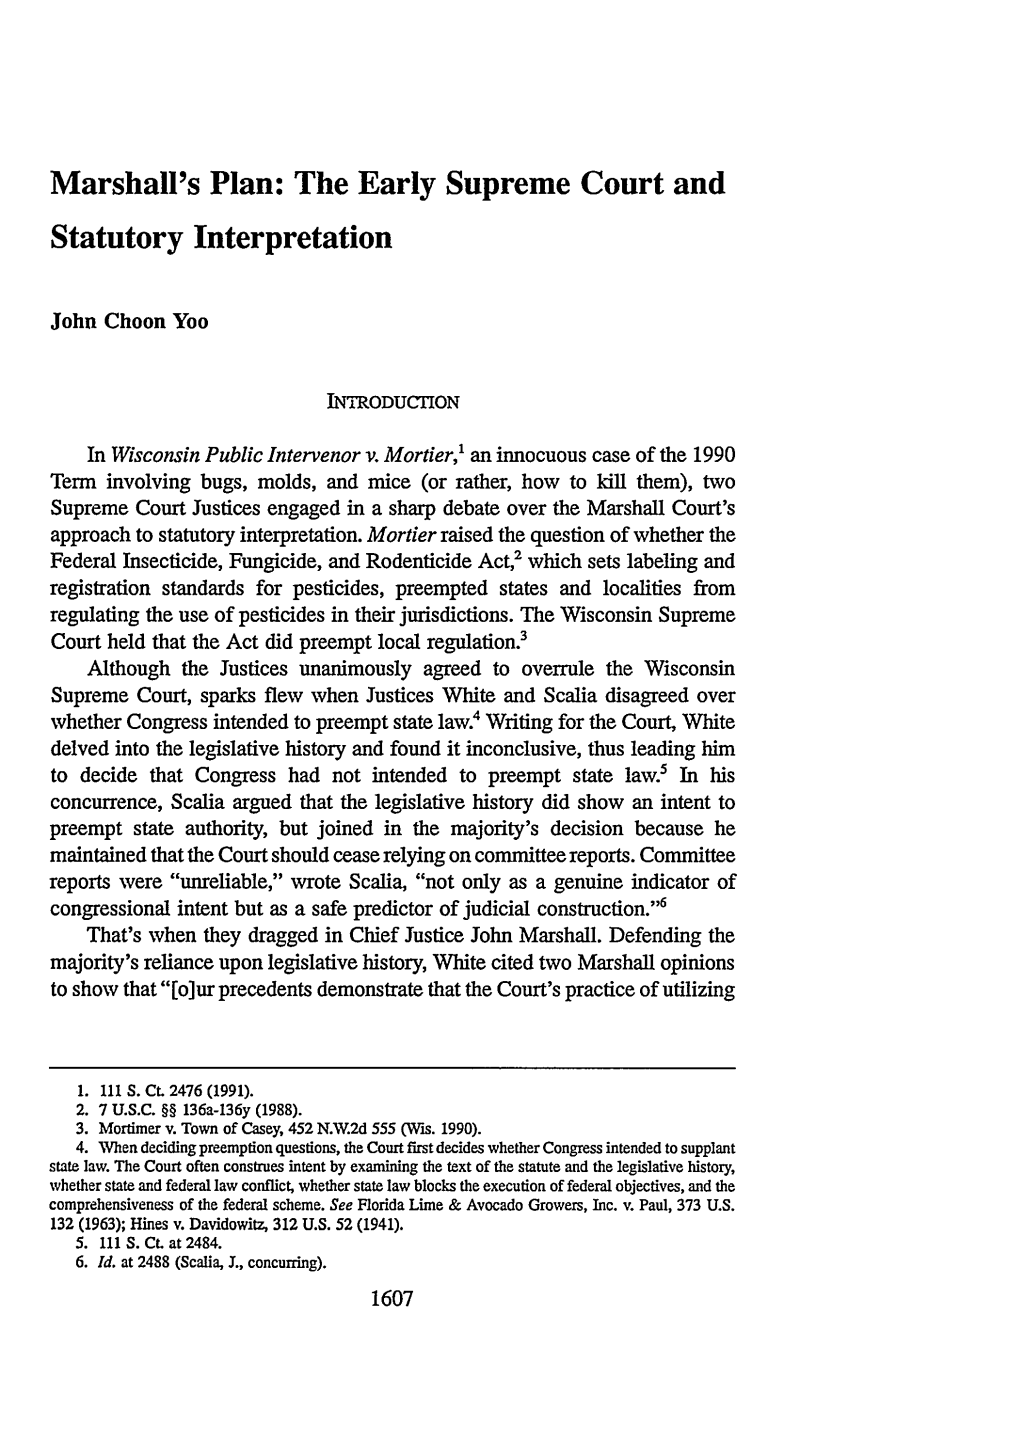 Marshall's Plan: the Early Supreme Court and Statutory Interpretation